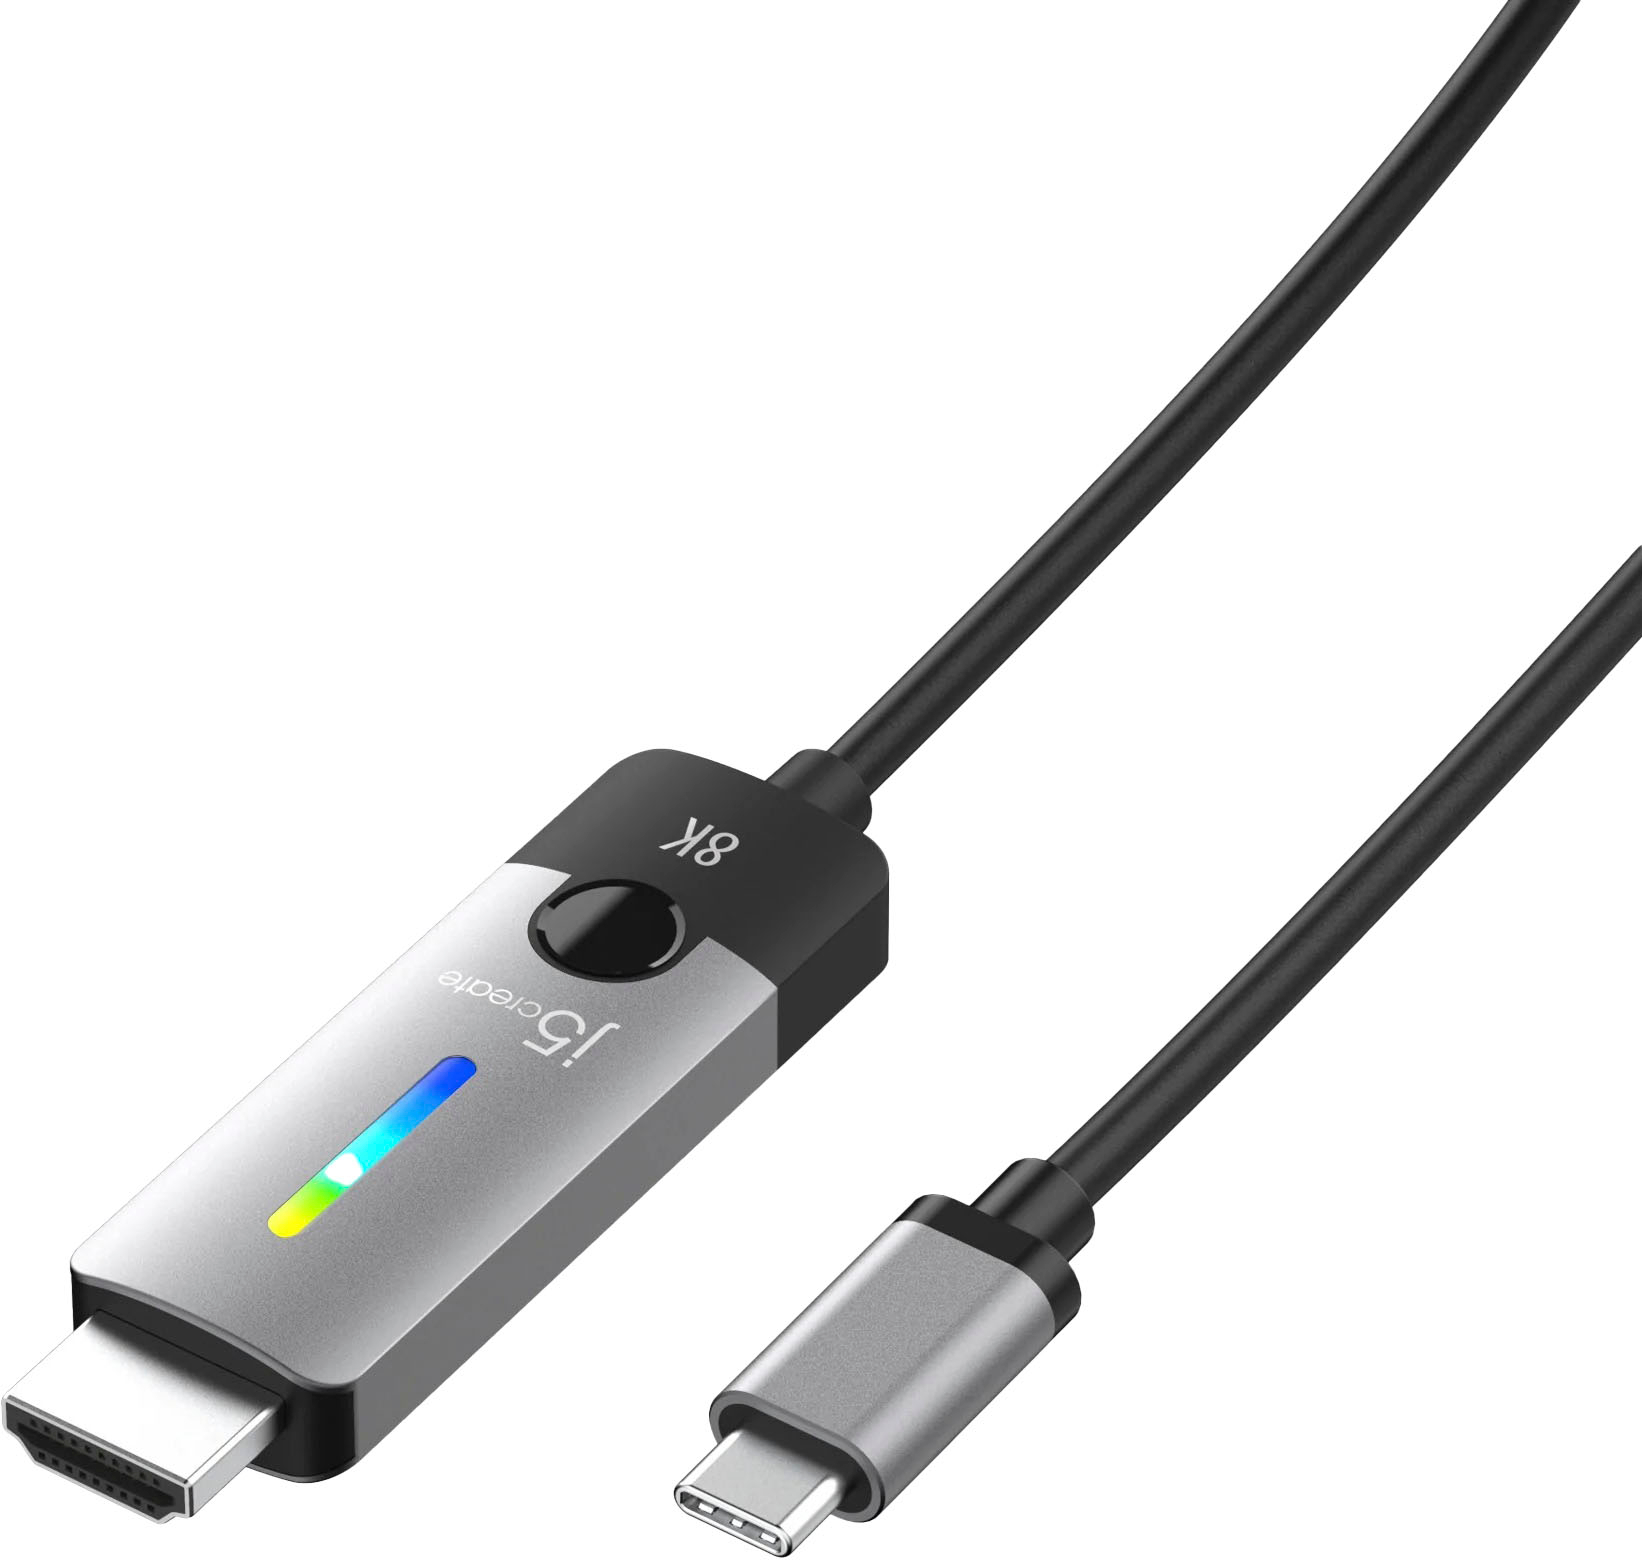 Insignia™ 6' DisplayPort to HDMI Cable Black NS-PCDPHD6 - Best Buy